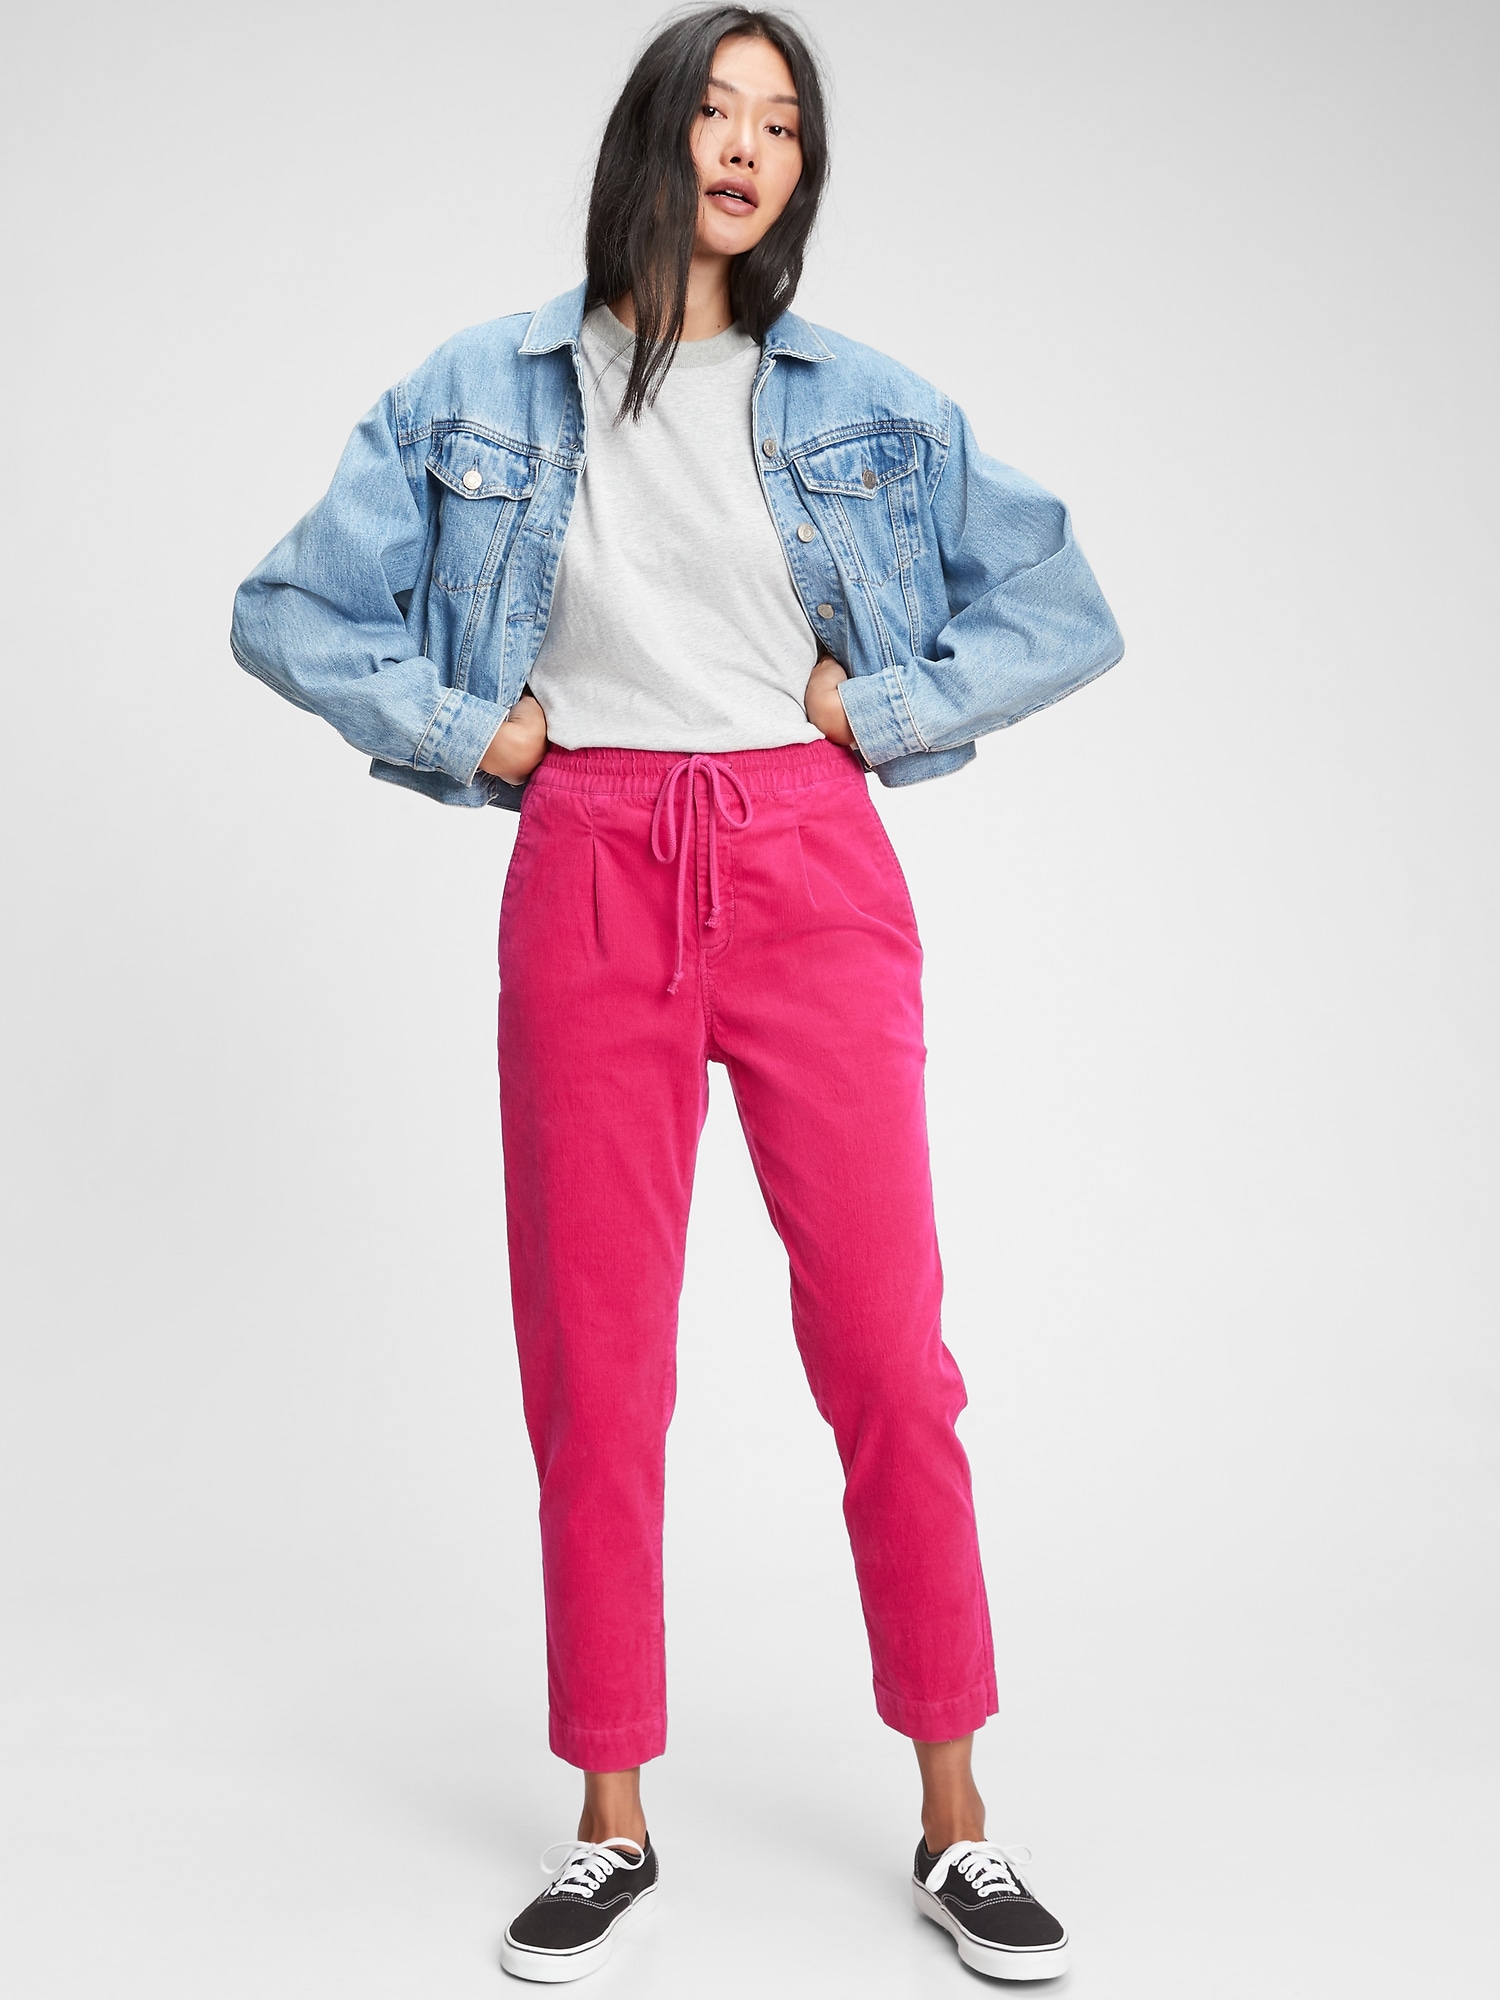 pink jeans, chambray shirt  Hot pink pants, Fashion, Pink pants outfit